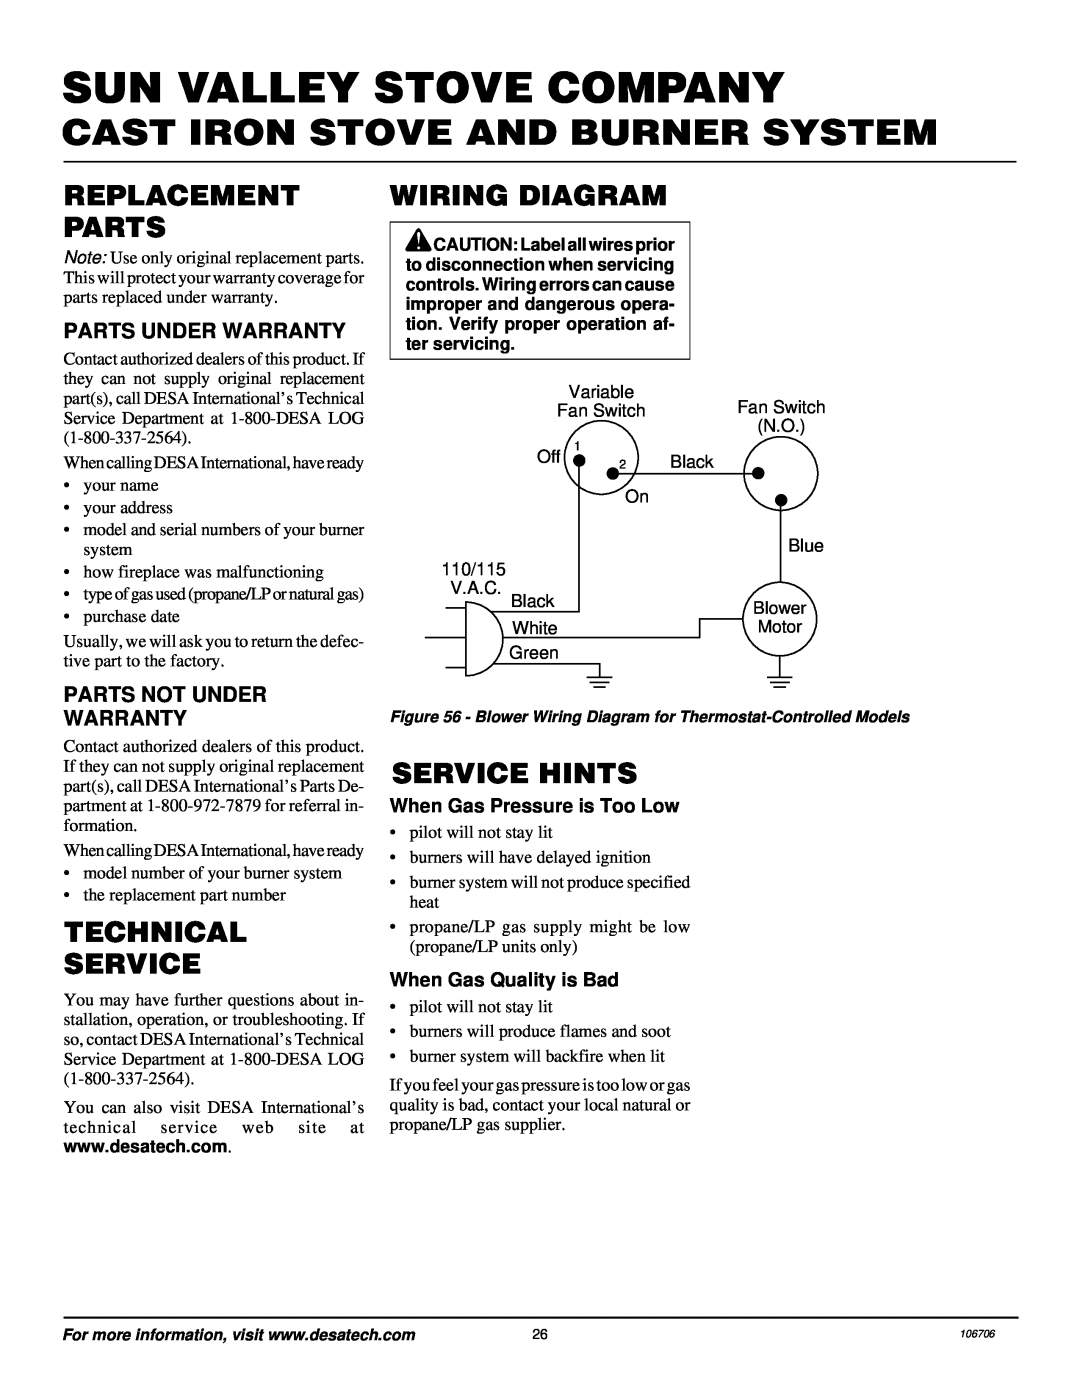 Desa MSRBVN, MSRBVP Replacement Parts, Technical Service, Wiring Diagram, Service Hints, Parts Under Warranty 